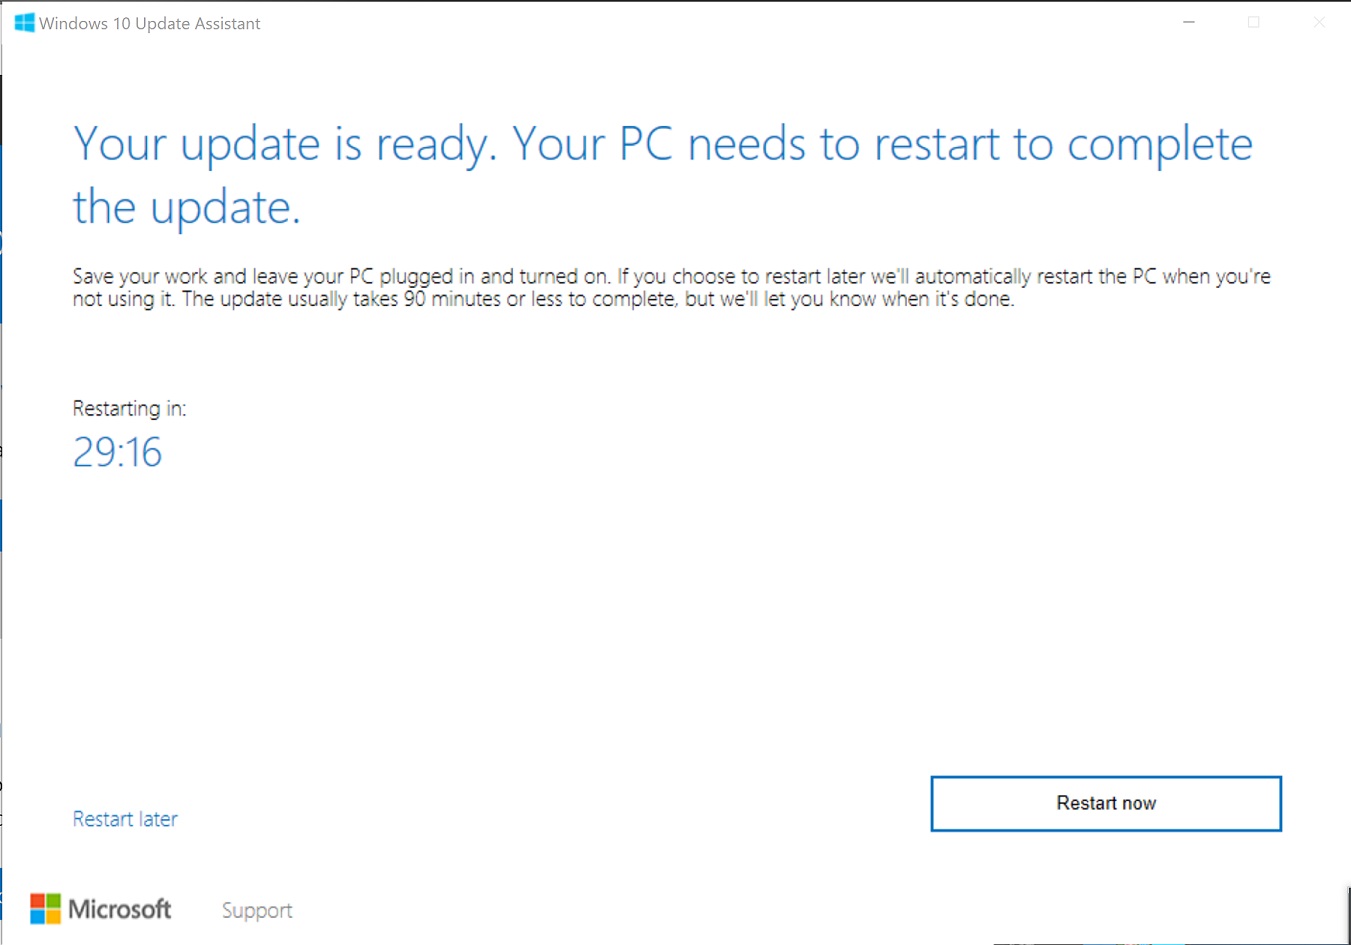 Windows 10 Creators update upgrade assistant tool auto restart